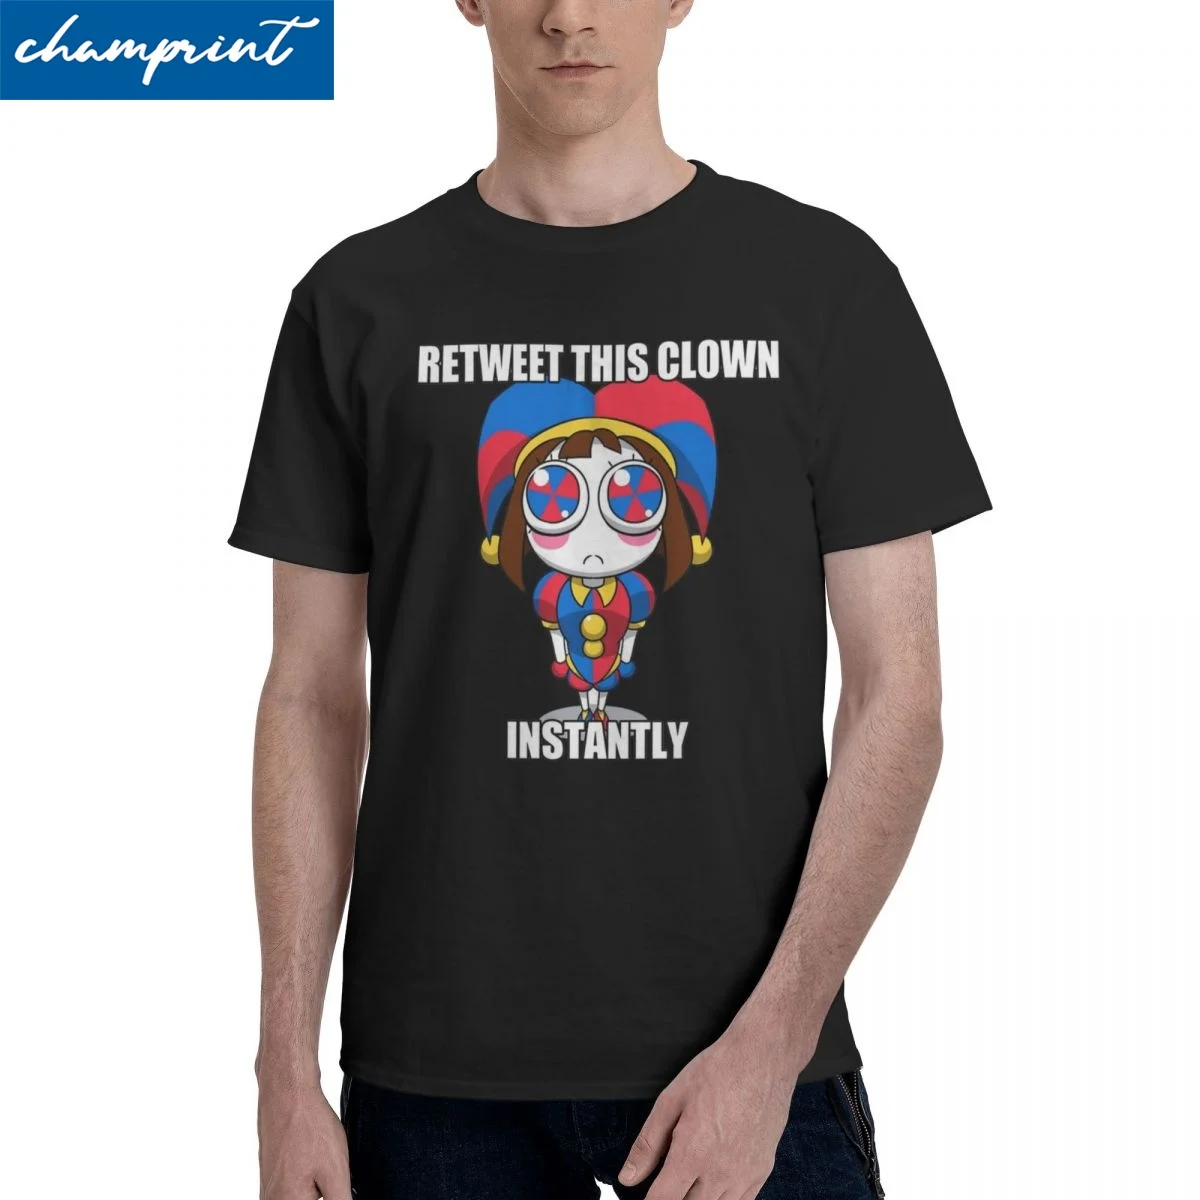 

Amazing The Amazing Digital Circus Meme T-Shirt Men Women's Round Neck 100% Cotton T Shirts Short Sleeve Tee Shirt Gift Idea Top